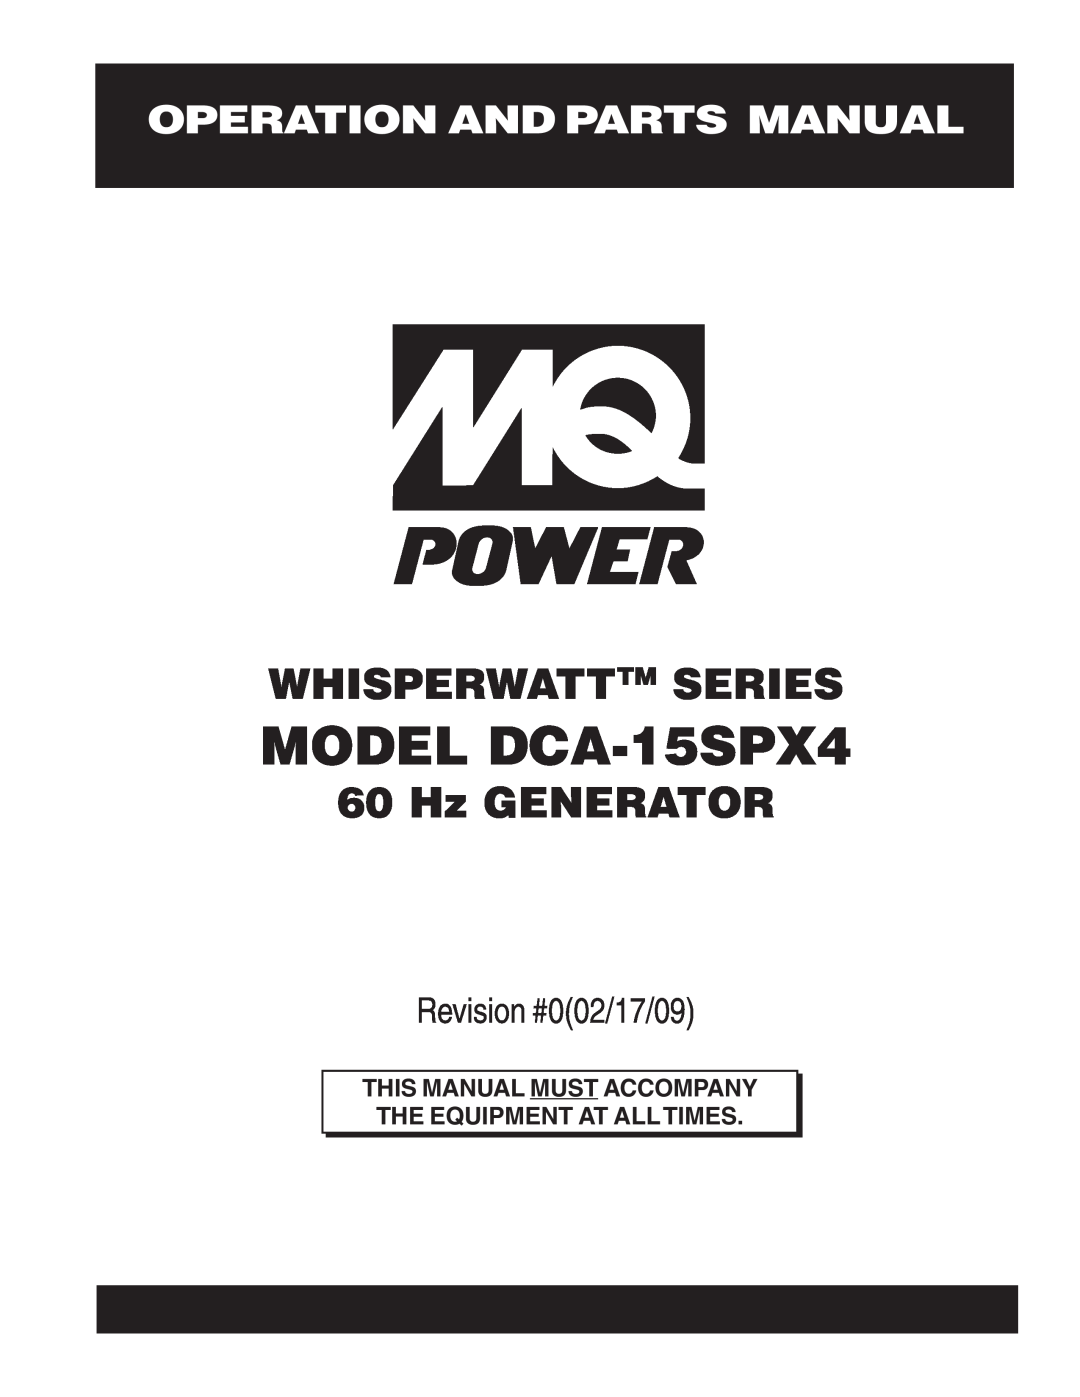 Multiquip operation manual Operation And Parts Manual, MODEL DCA-15SPX4, Whisperwatttm Series, Hz GENERATOR 